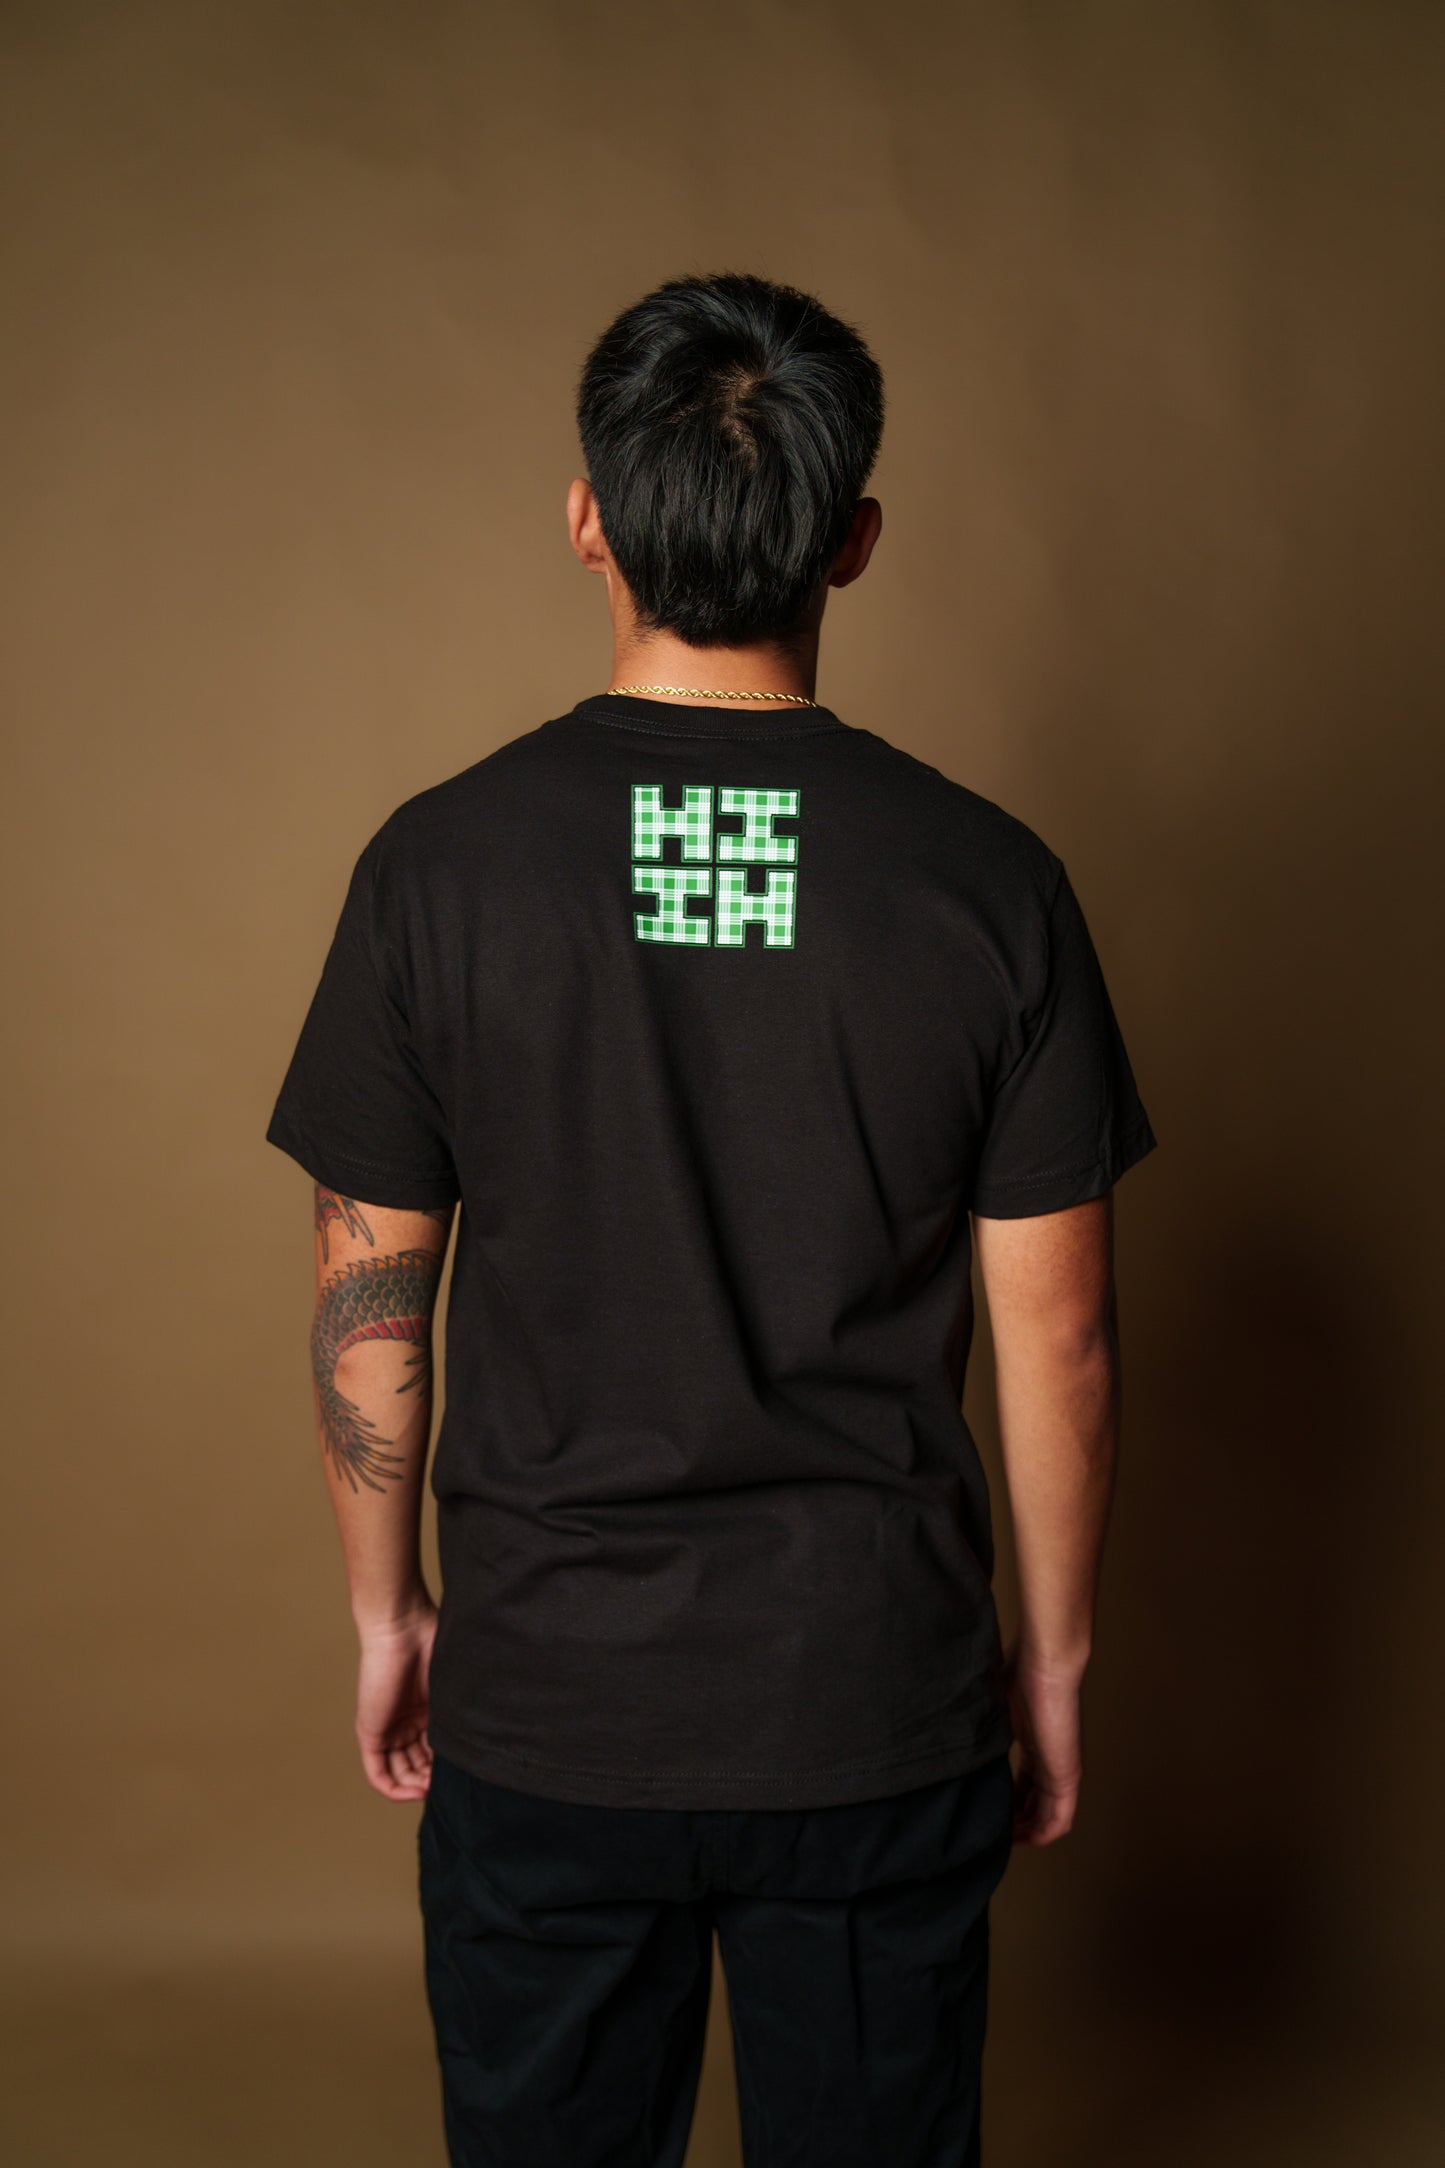 Made in Hawaii Black T-Shirt - Black/Green